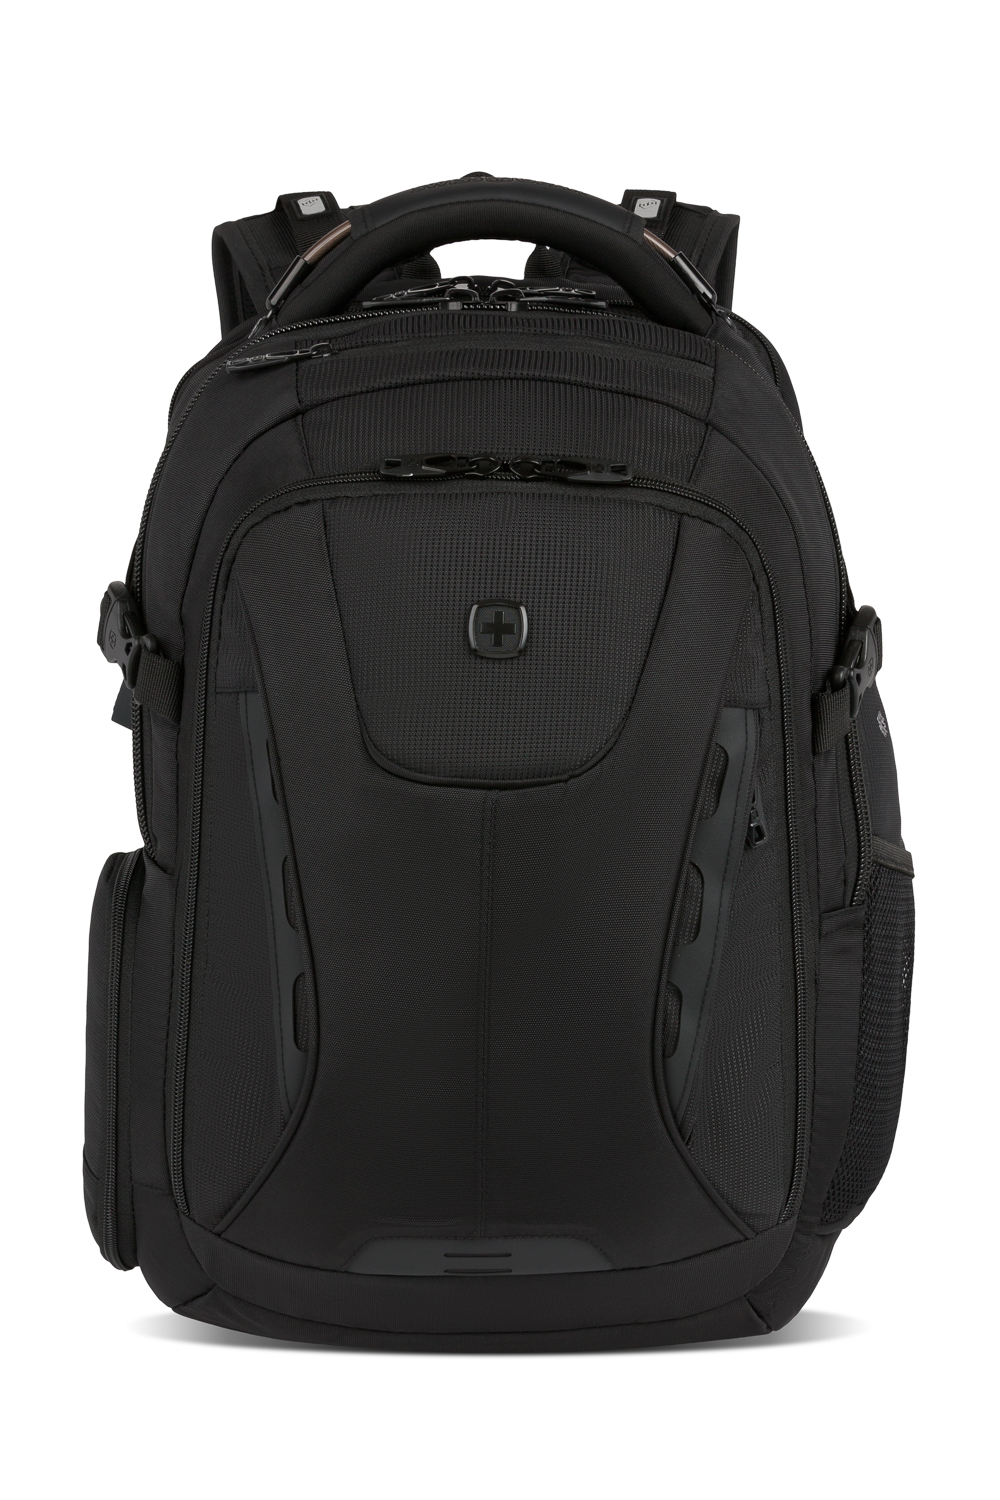 SWISSGEAR 5358 USB ScanSmart Laptop Backpack - Black